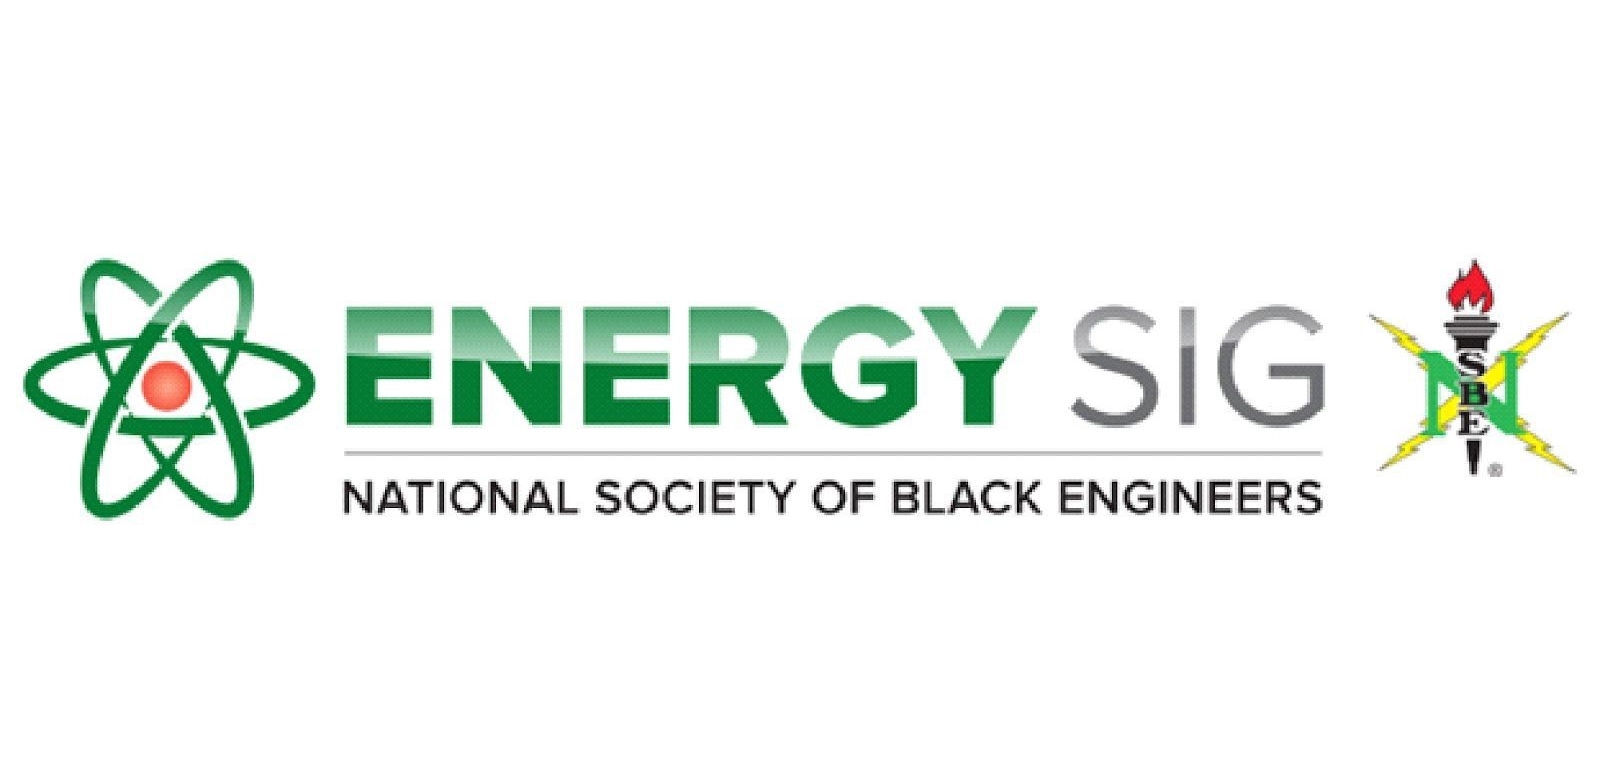 National Society of Black Engineers logo.